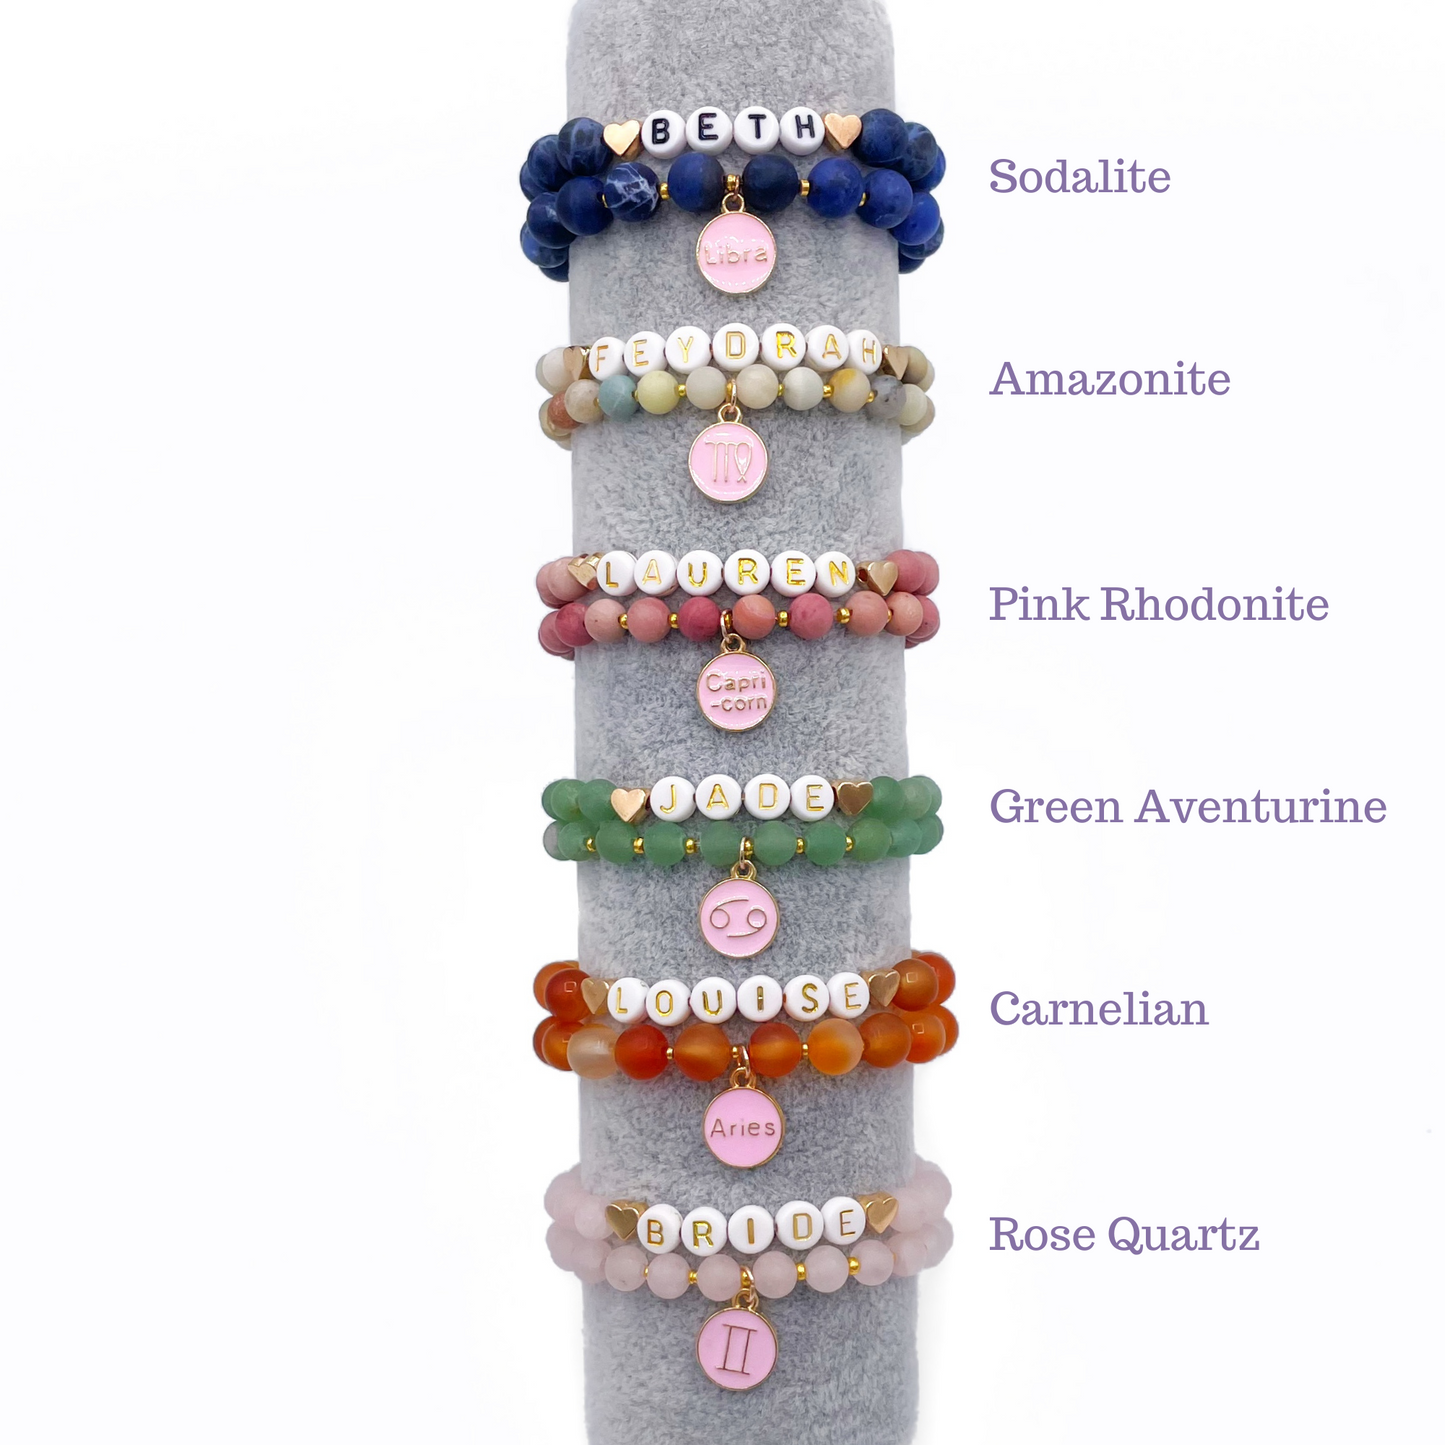 Personalised crystal bracelets